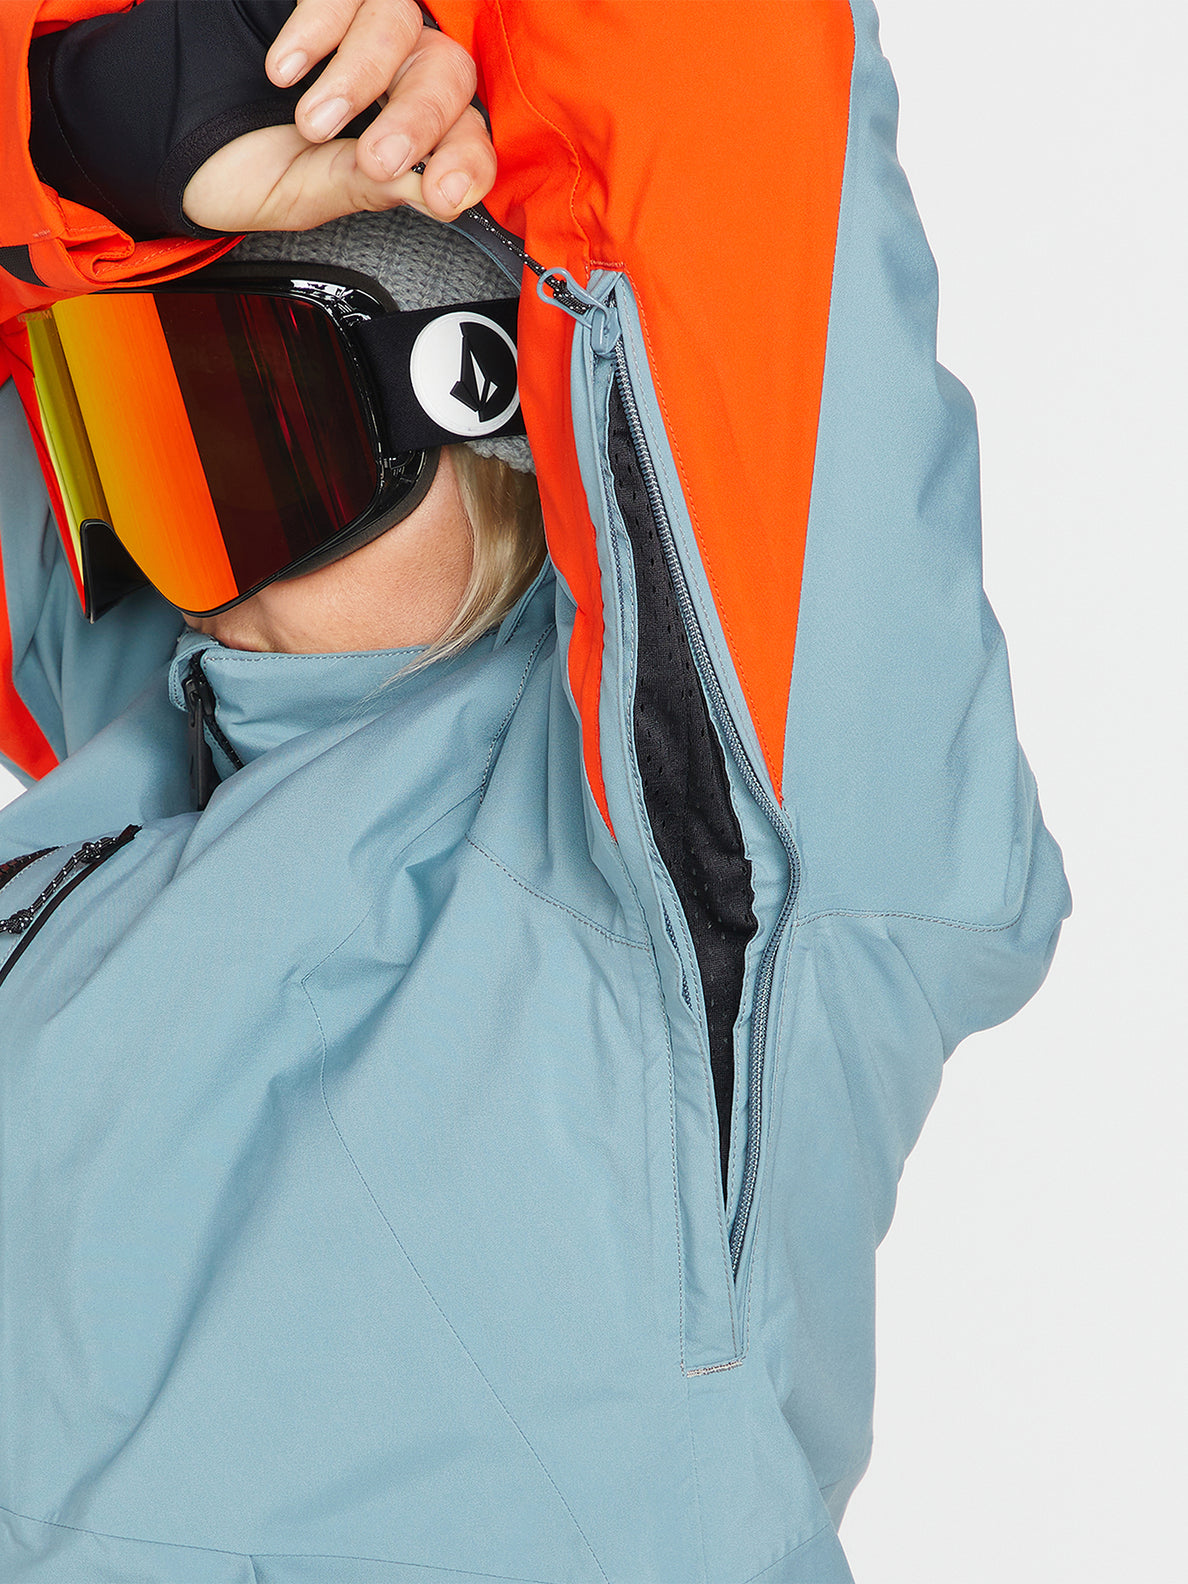 Volcom 3D Stretch Gore-Tex Jacket Damen Snowboardjacke - Green Ash